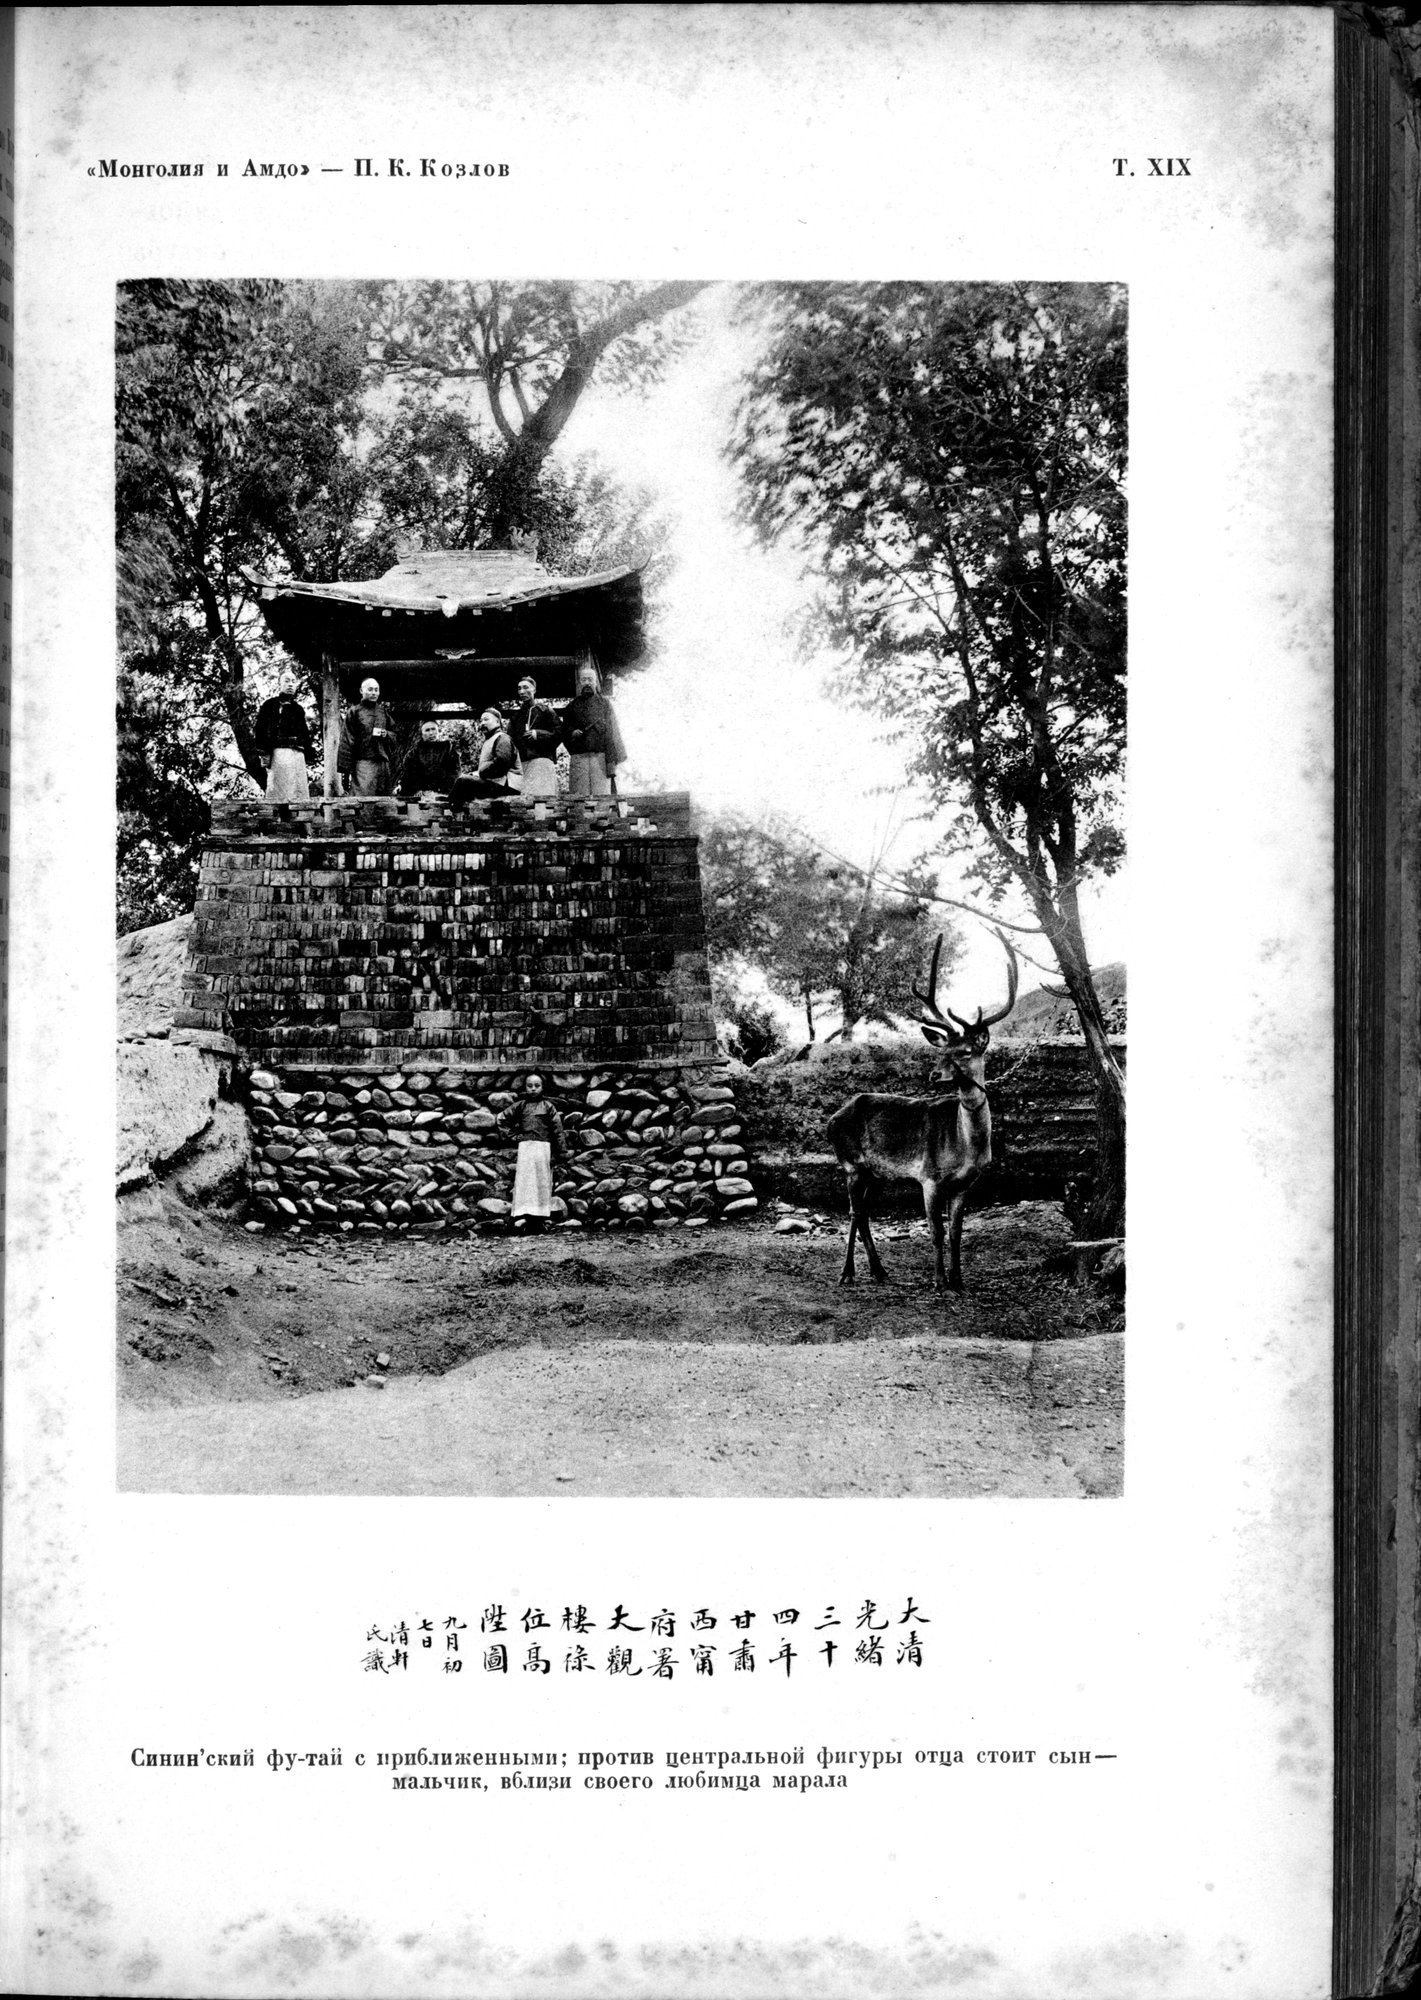 Mongoliya i Amdo i mertby gorod Khara-Khoto : vol.1 / Page 313 (Grayscale High Resolution Image)